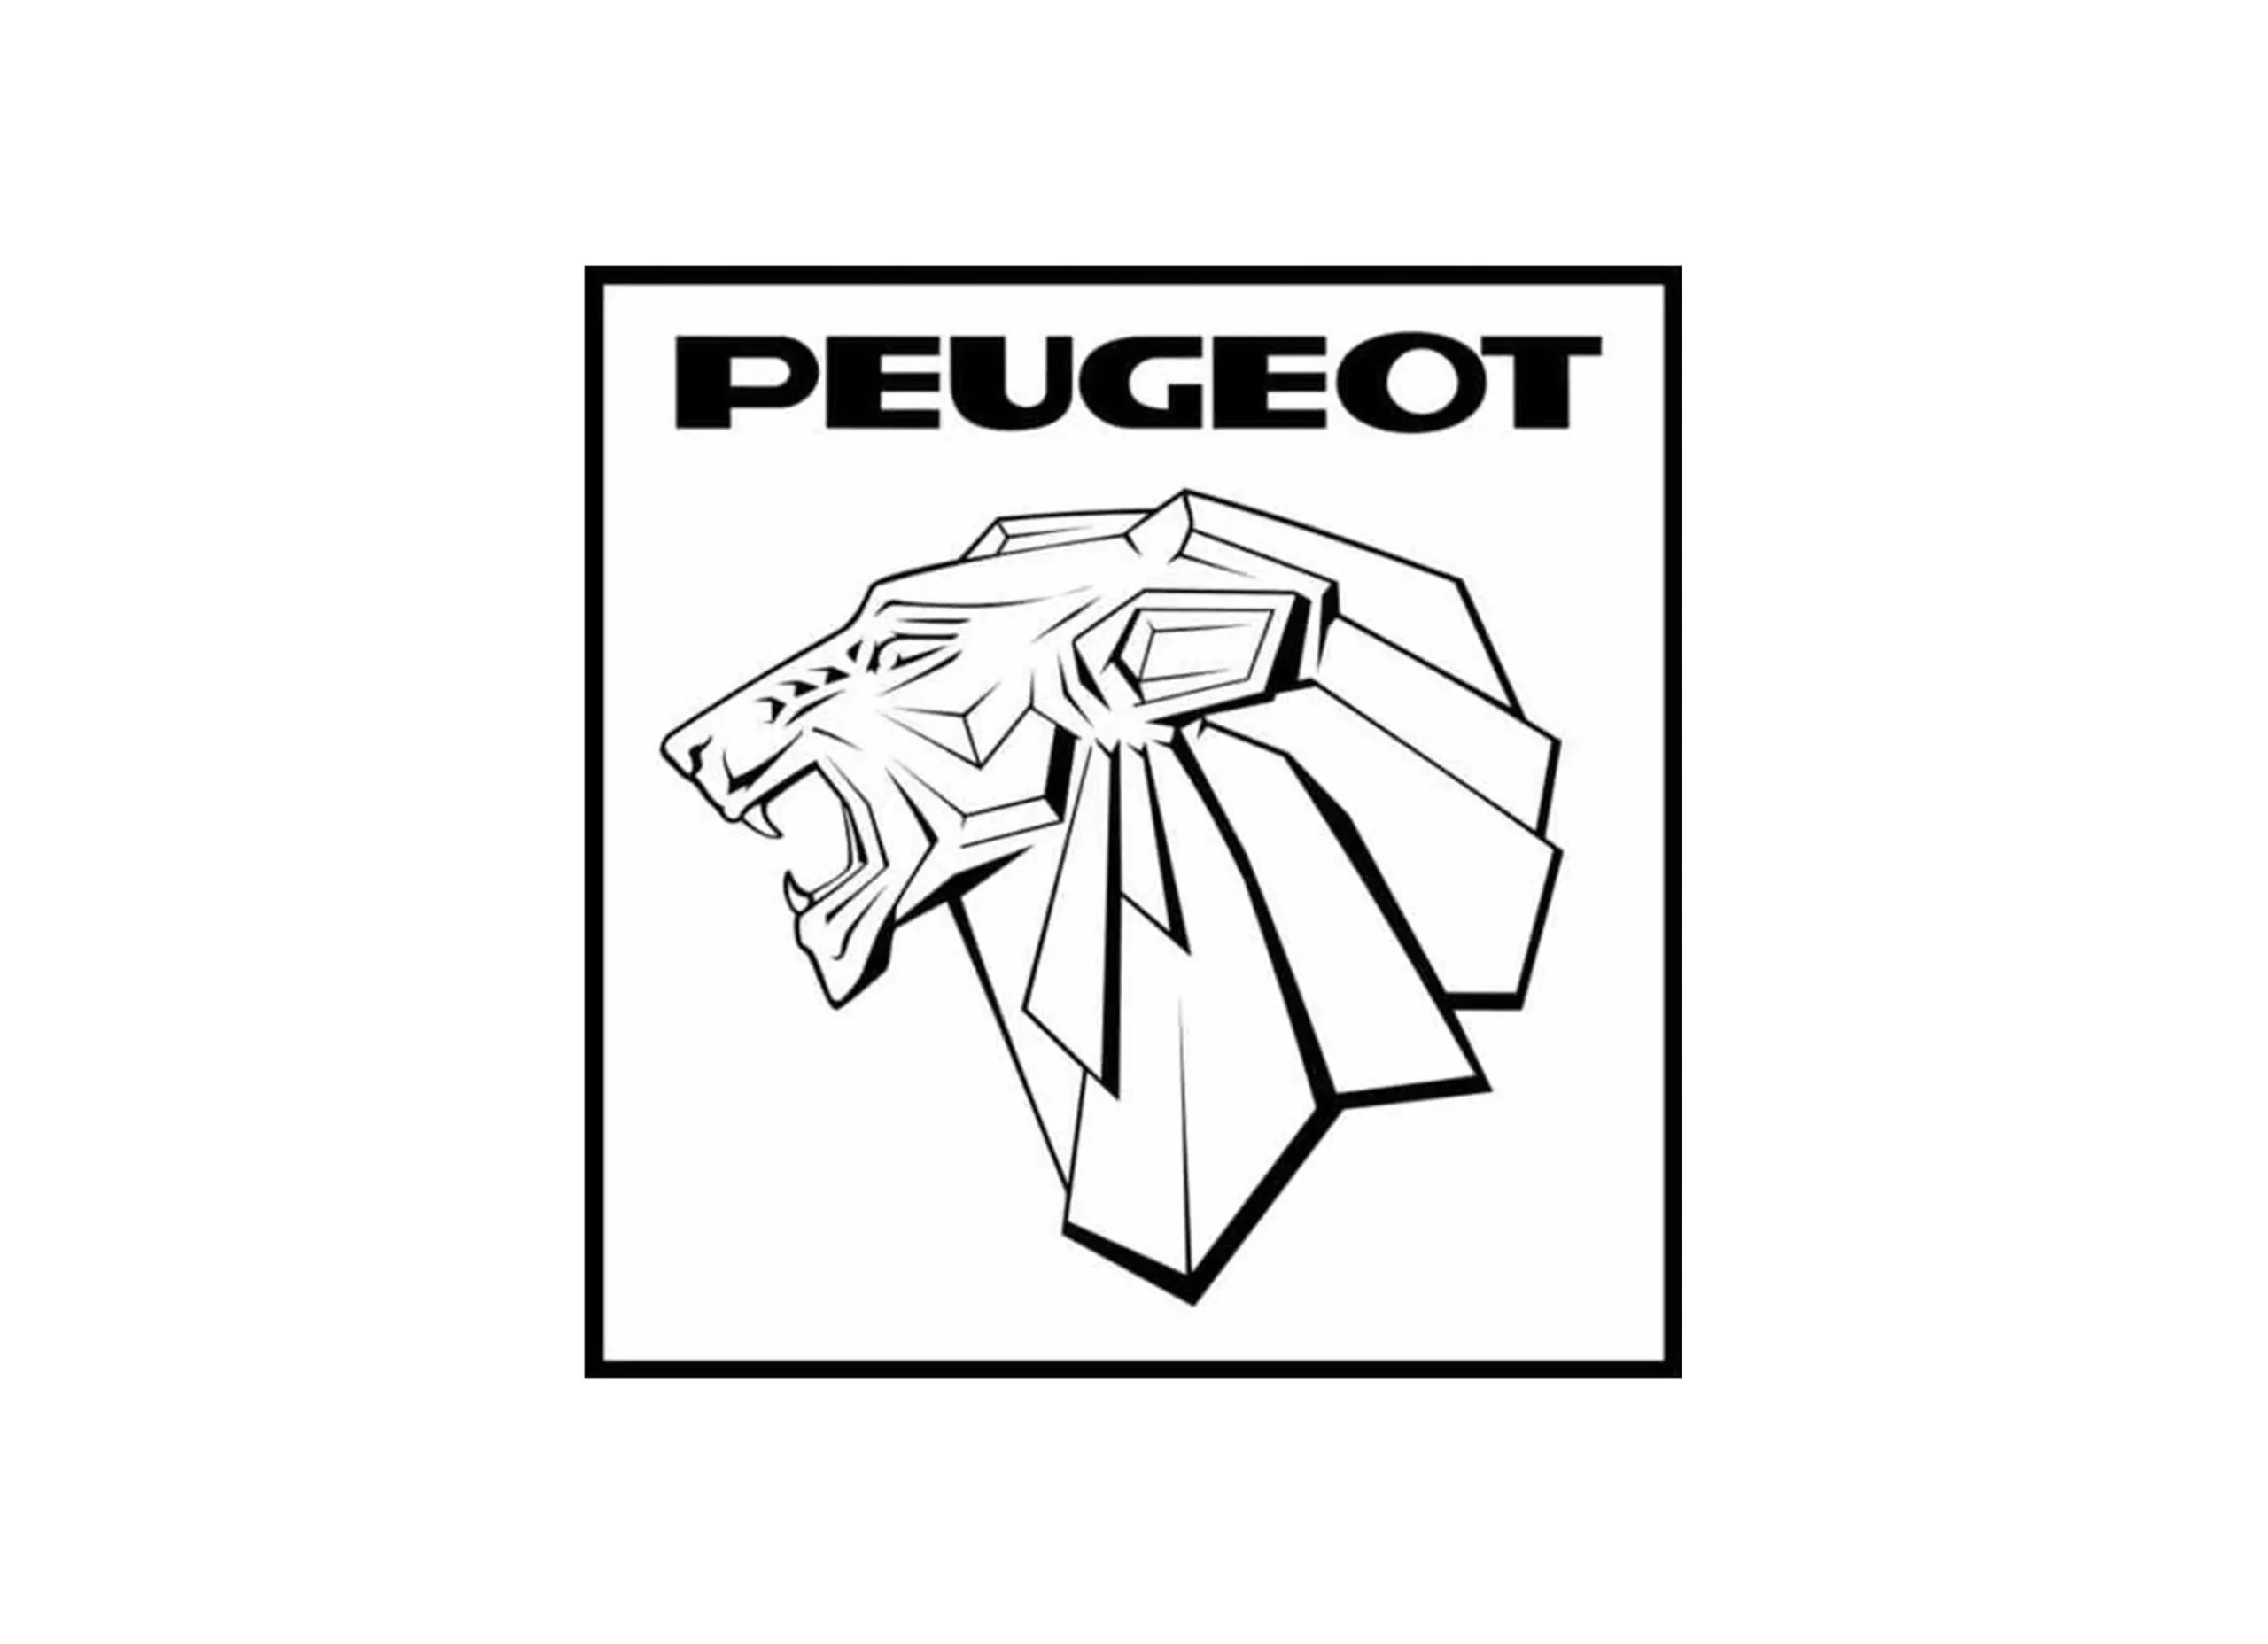 Peugeot logo 1968-1970